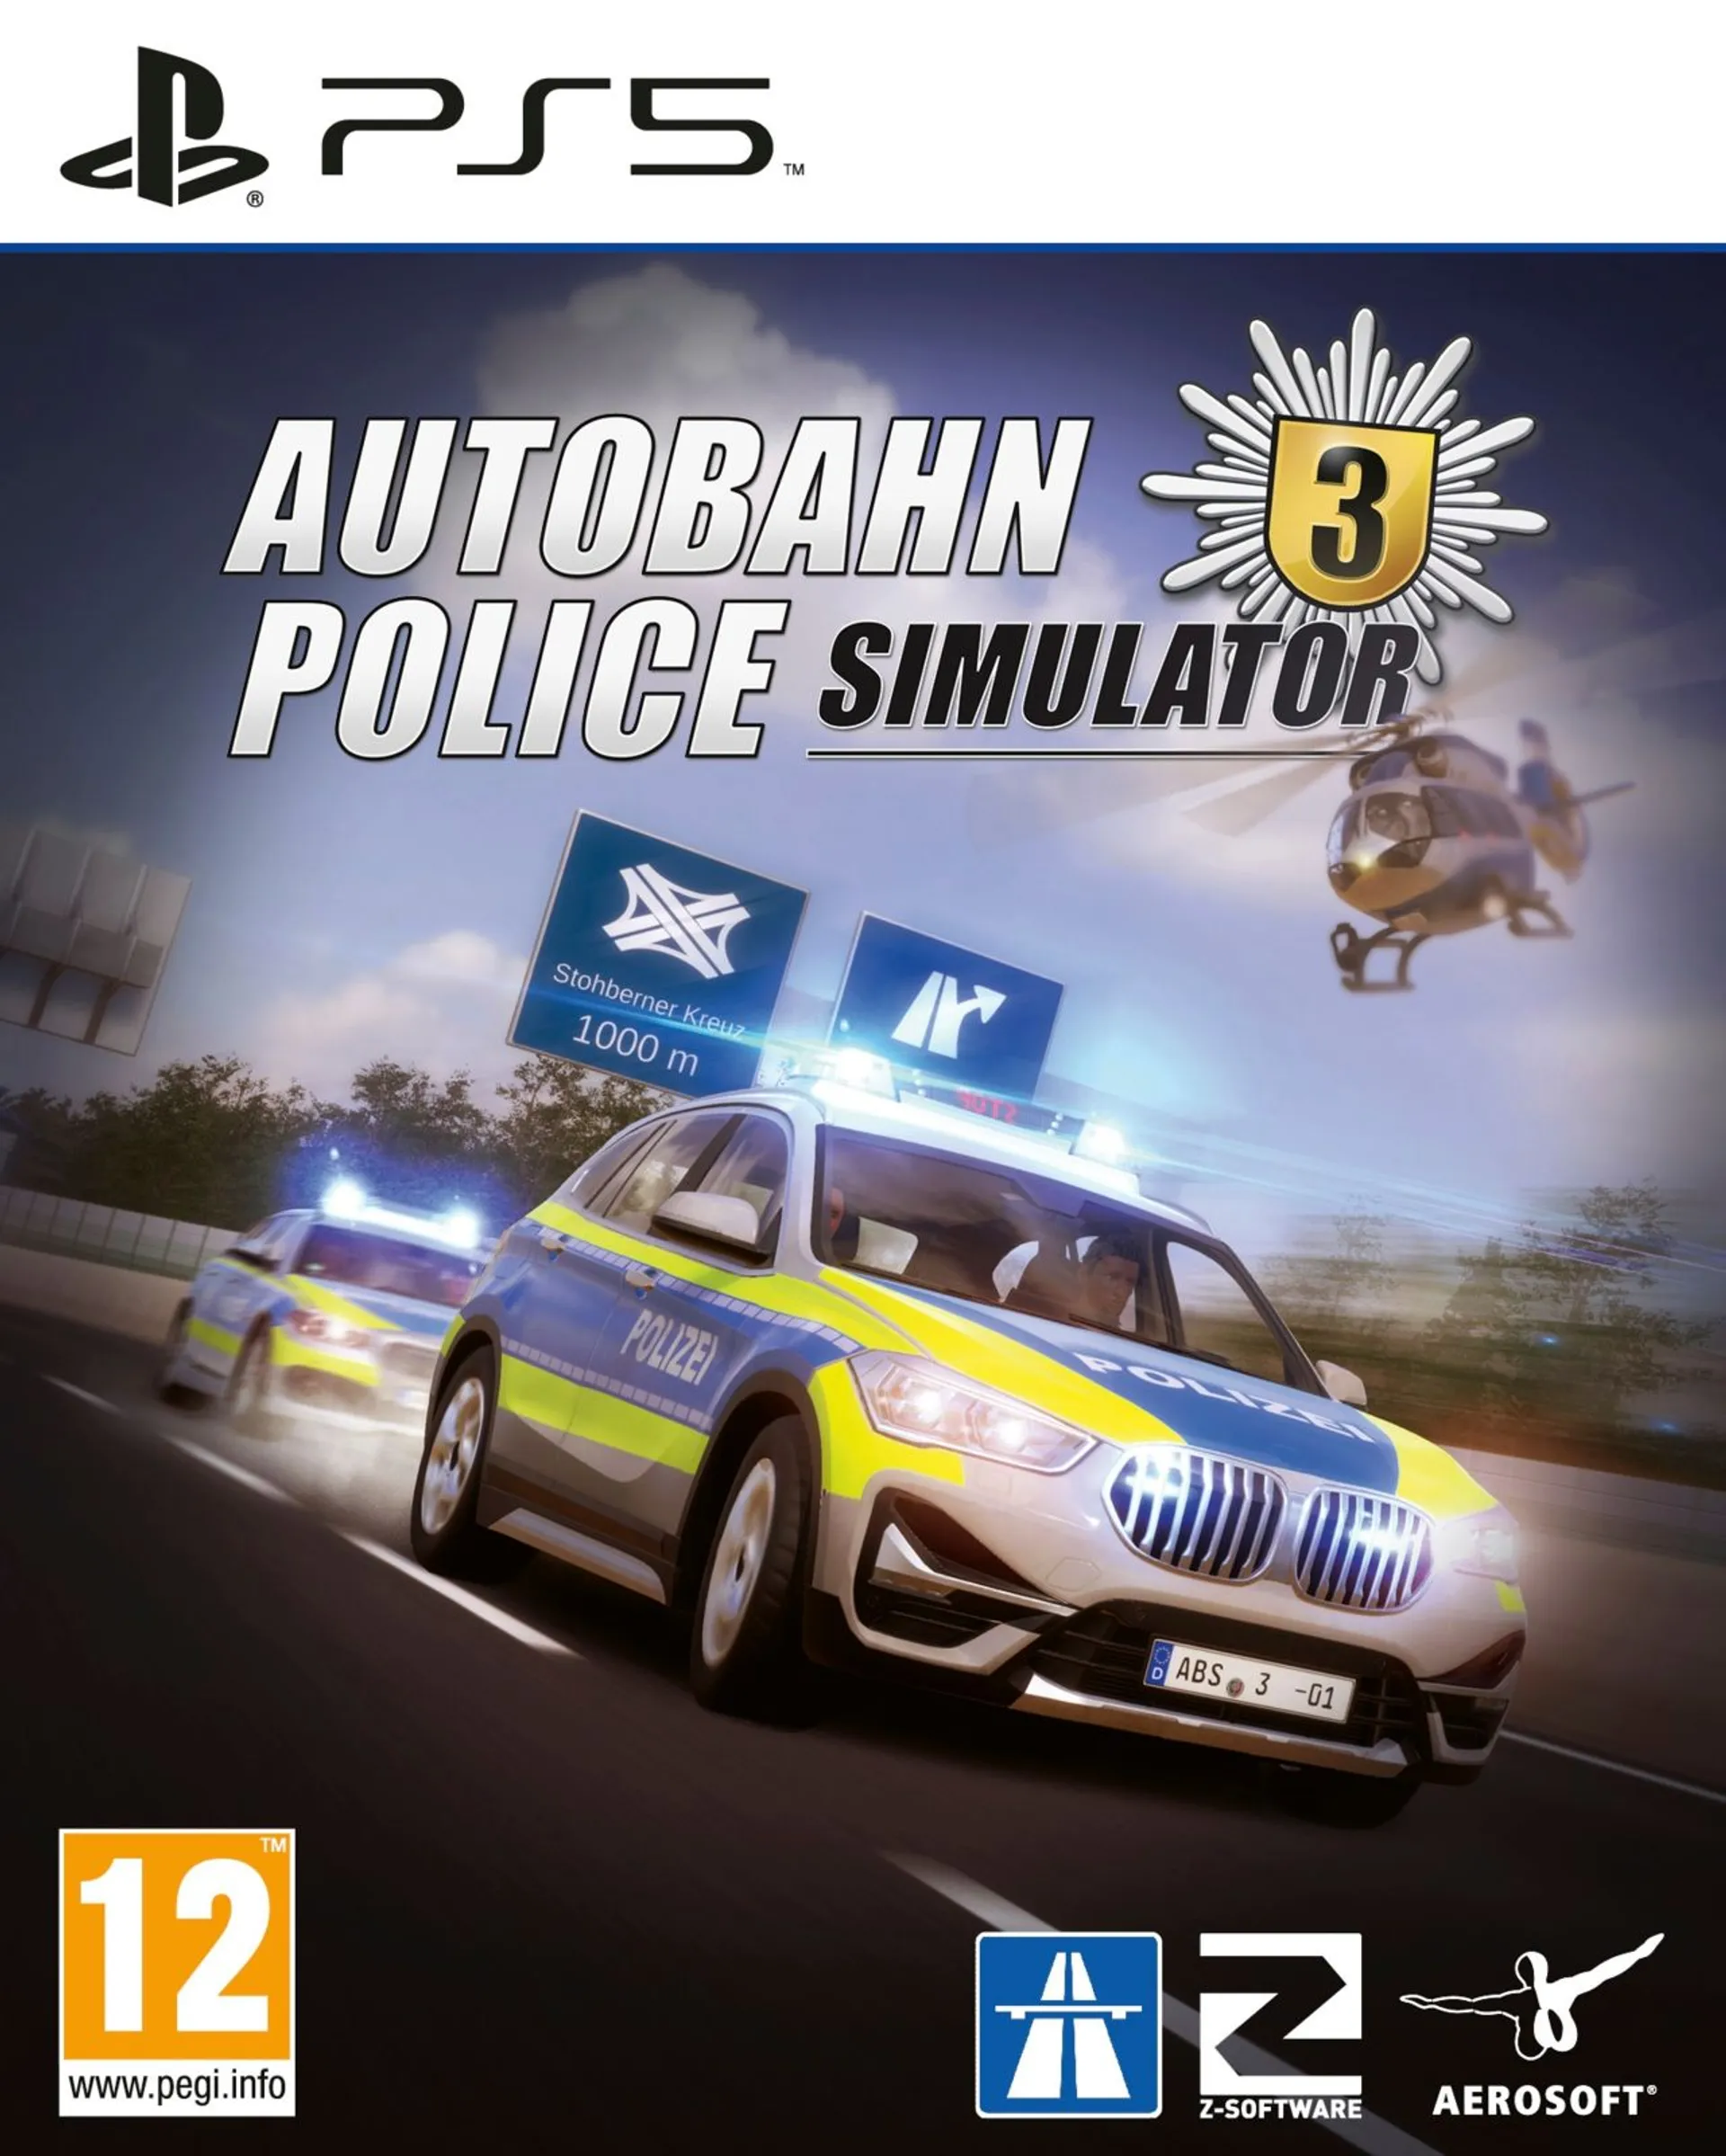 PS5 Autobahn police simulator 3 - 1